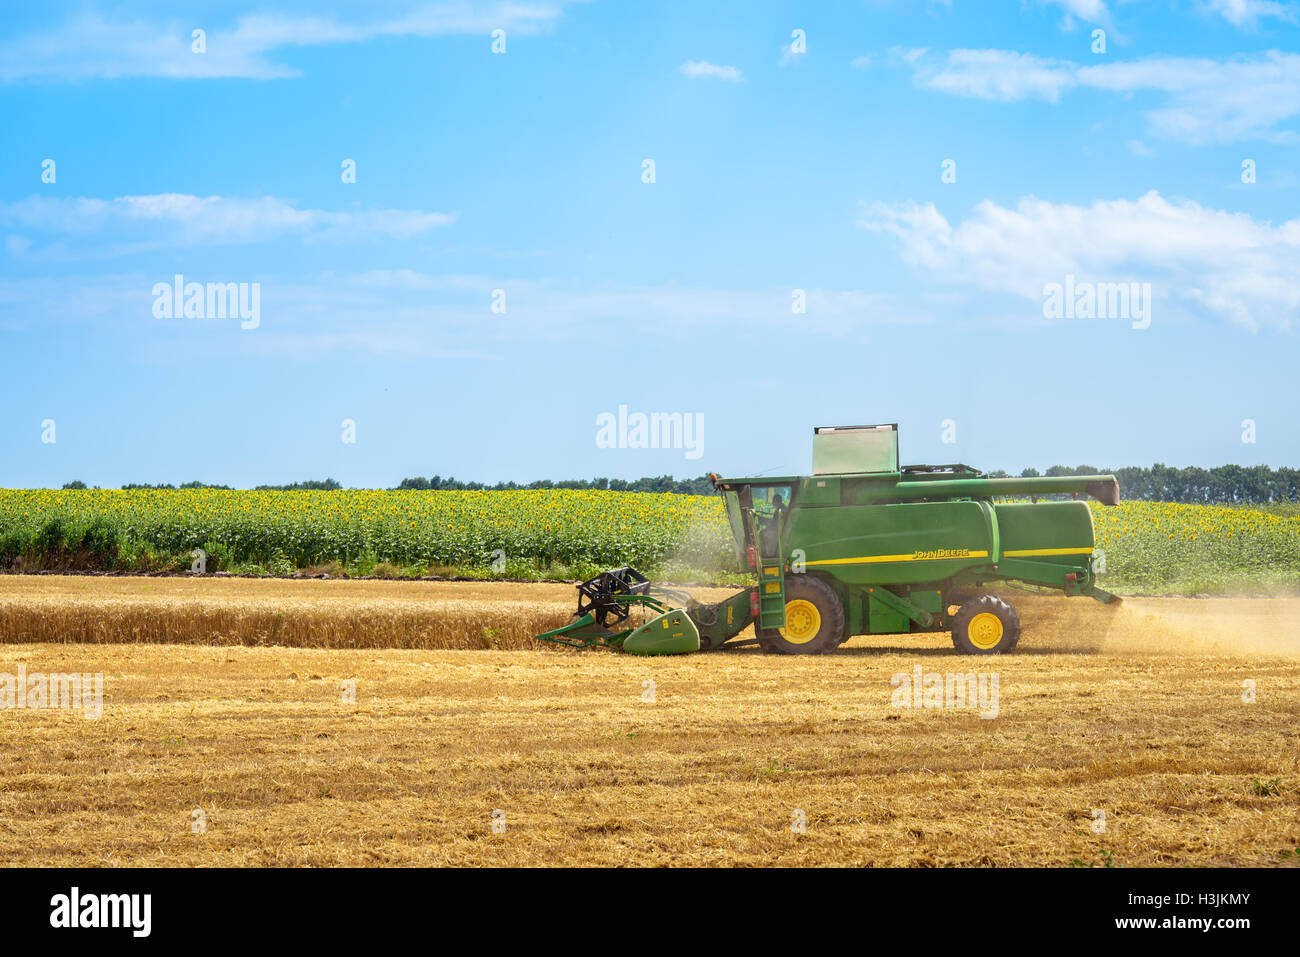 Dobrich, Bulgarien - Juli 08: Moderne John Deere Mähdrescher ernten Getreide im Feld in der Nähe der Stadt Dobrich, Bulgarien Juli 08, 20 Stockfoto